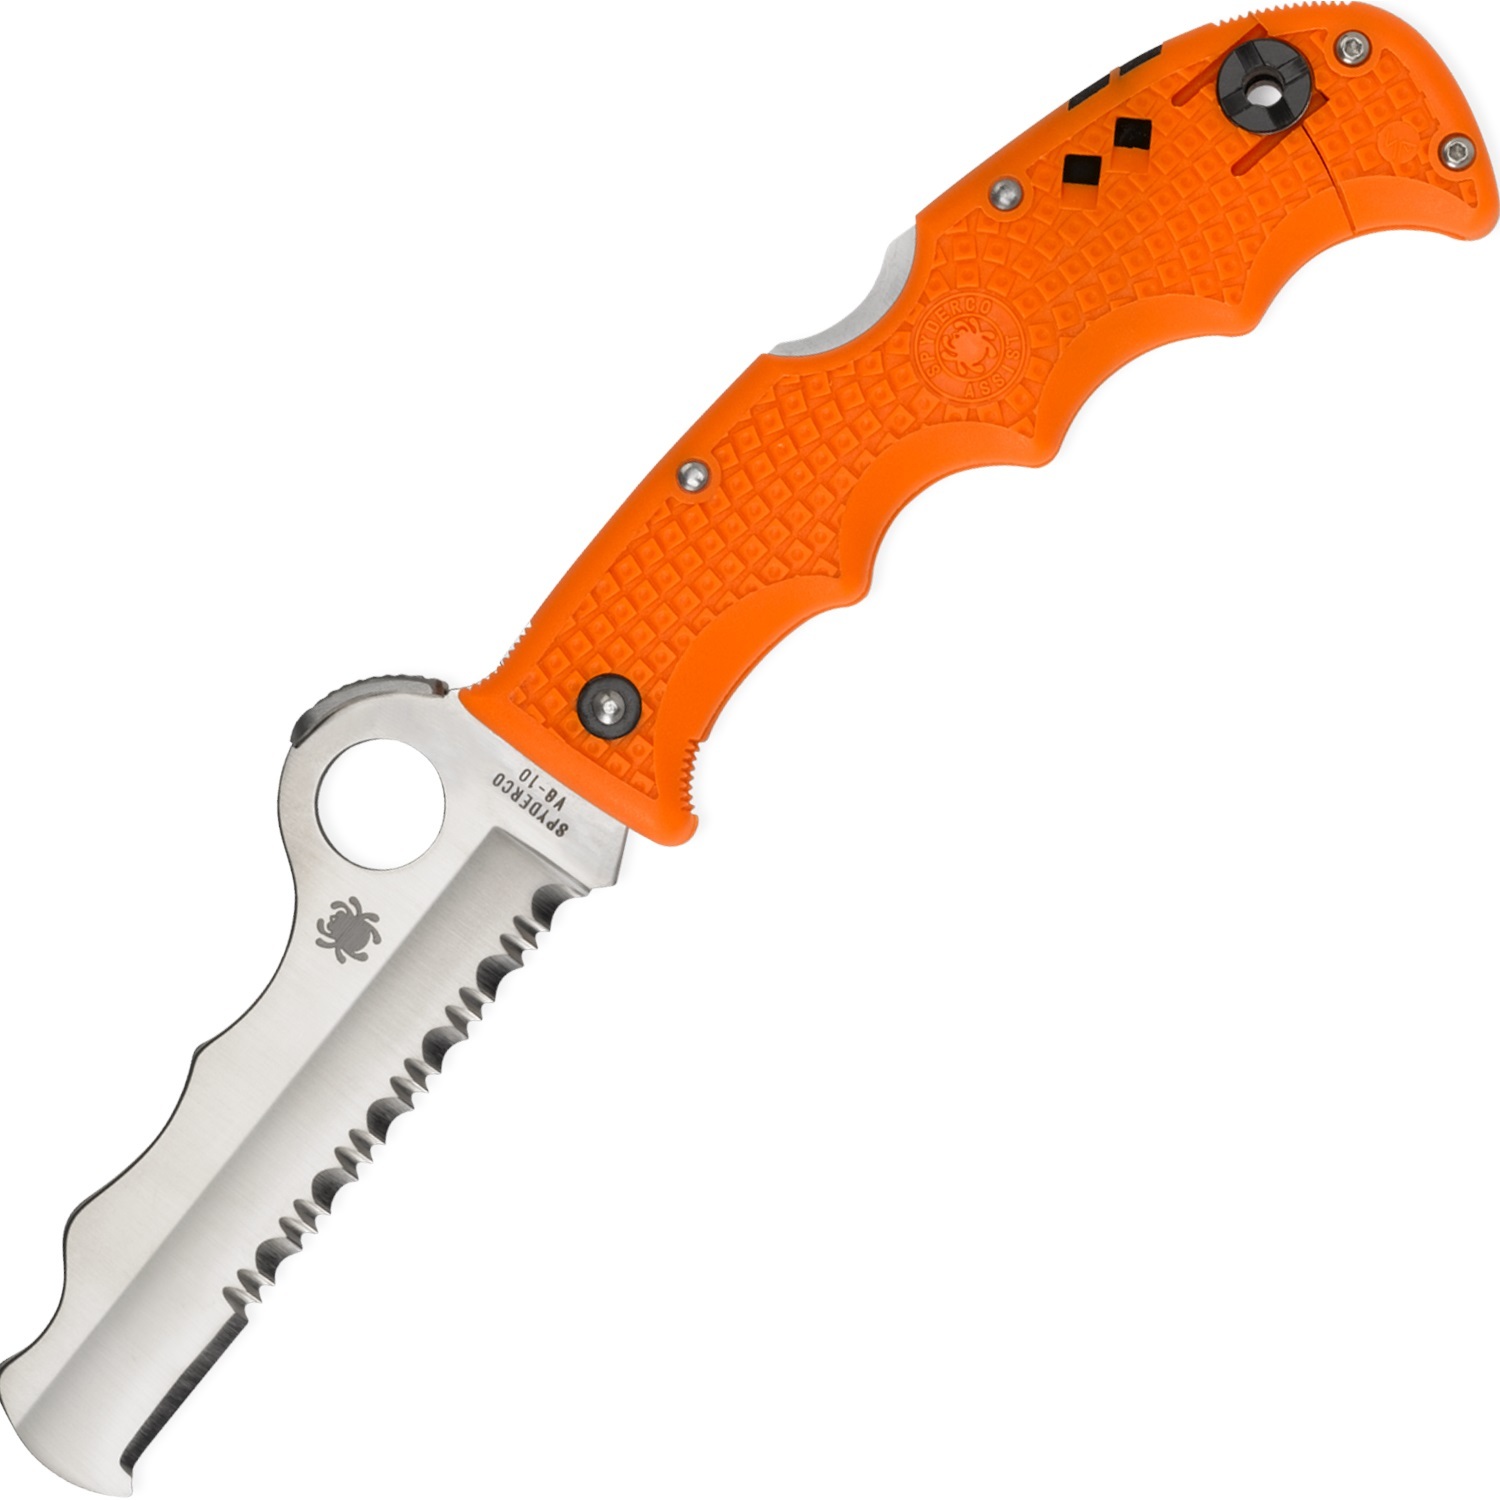 Складной нож Rescue Assist™ Orange - Spyderco 79PSOR, сталь VG-10 Satin Serrated, рукоять термопластик FRN, оранжевый - фото 1